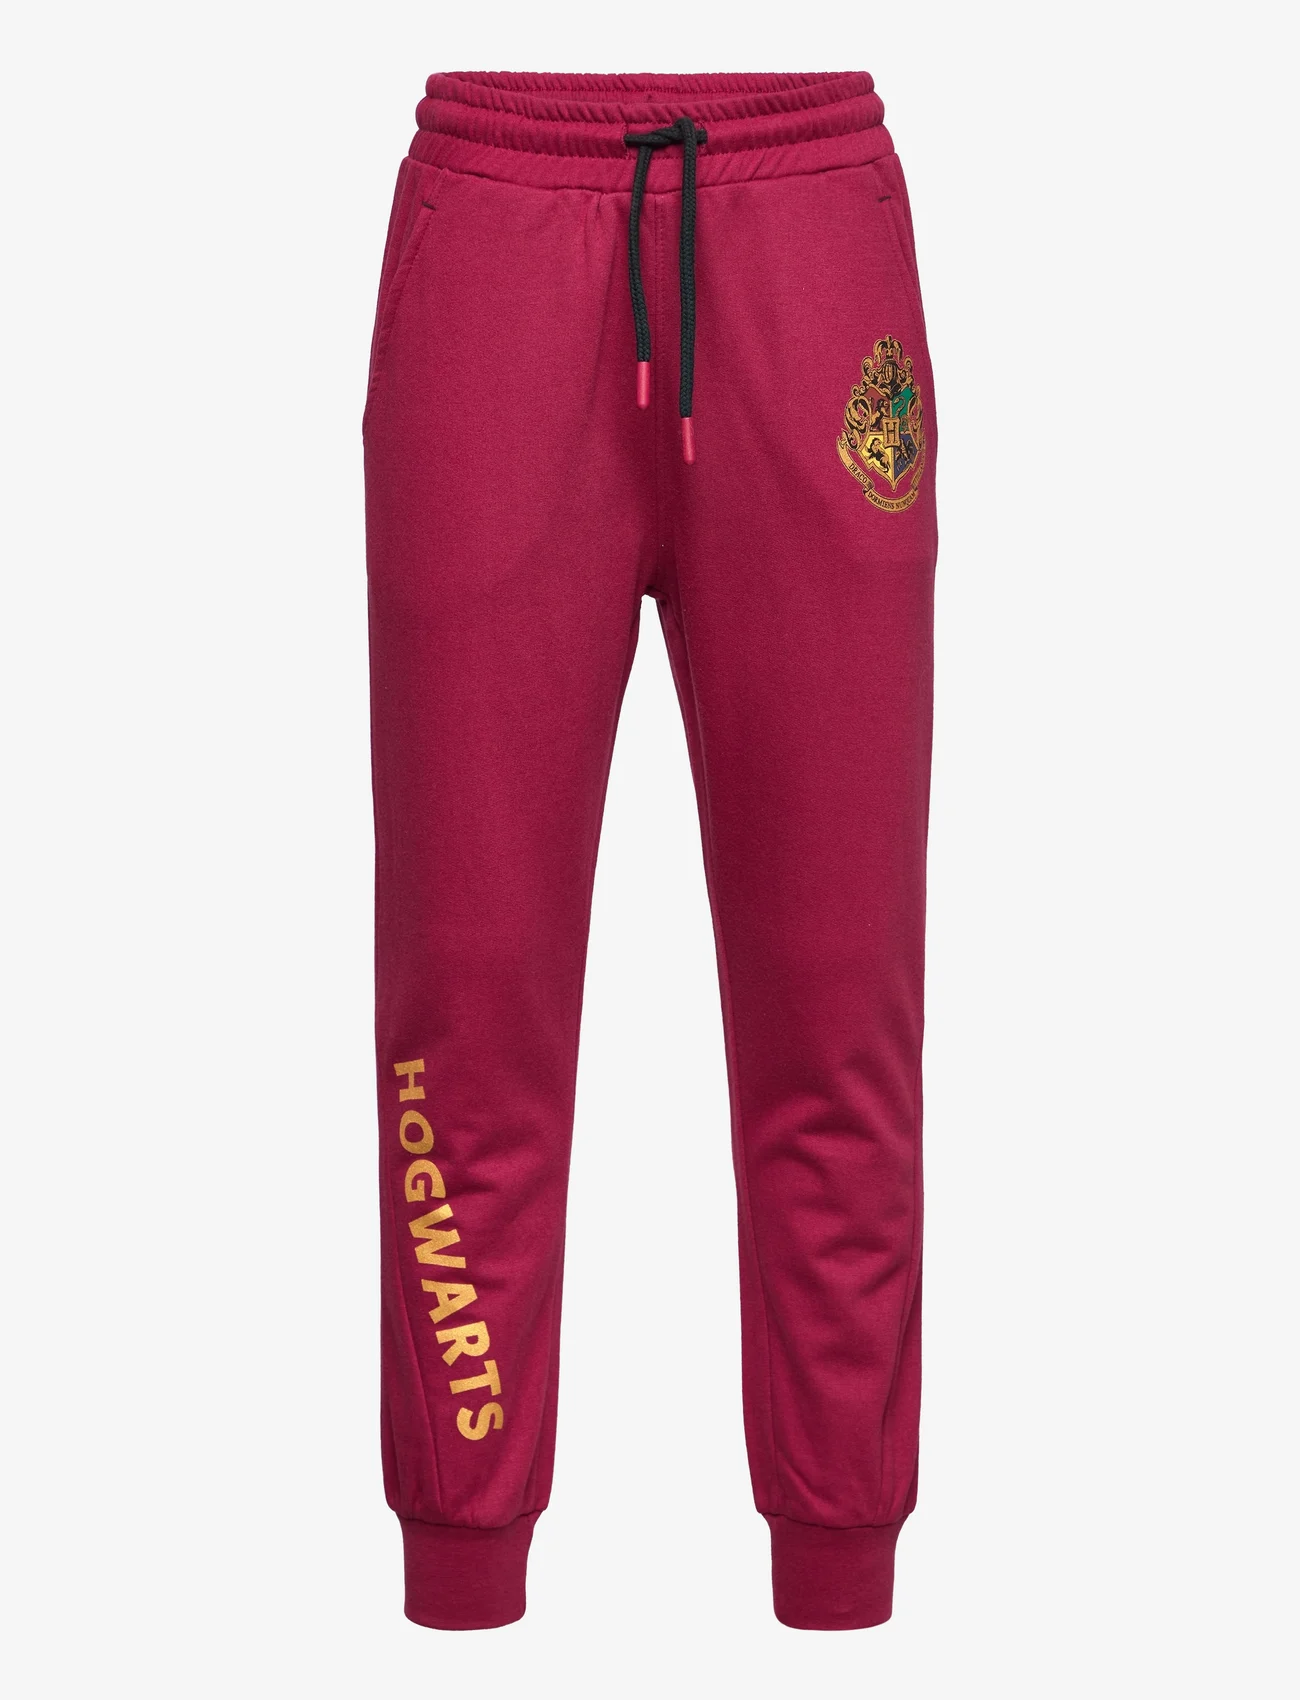 Harry Potter - JOGGING PANT - sweatpants - dark red - 0